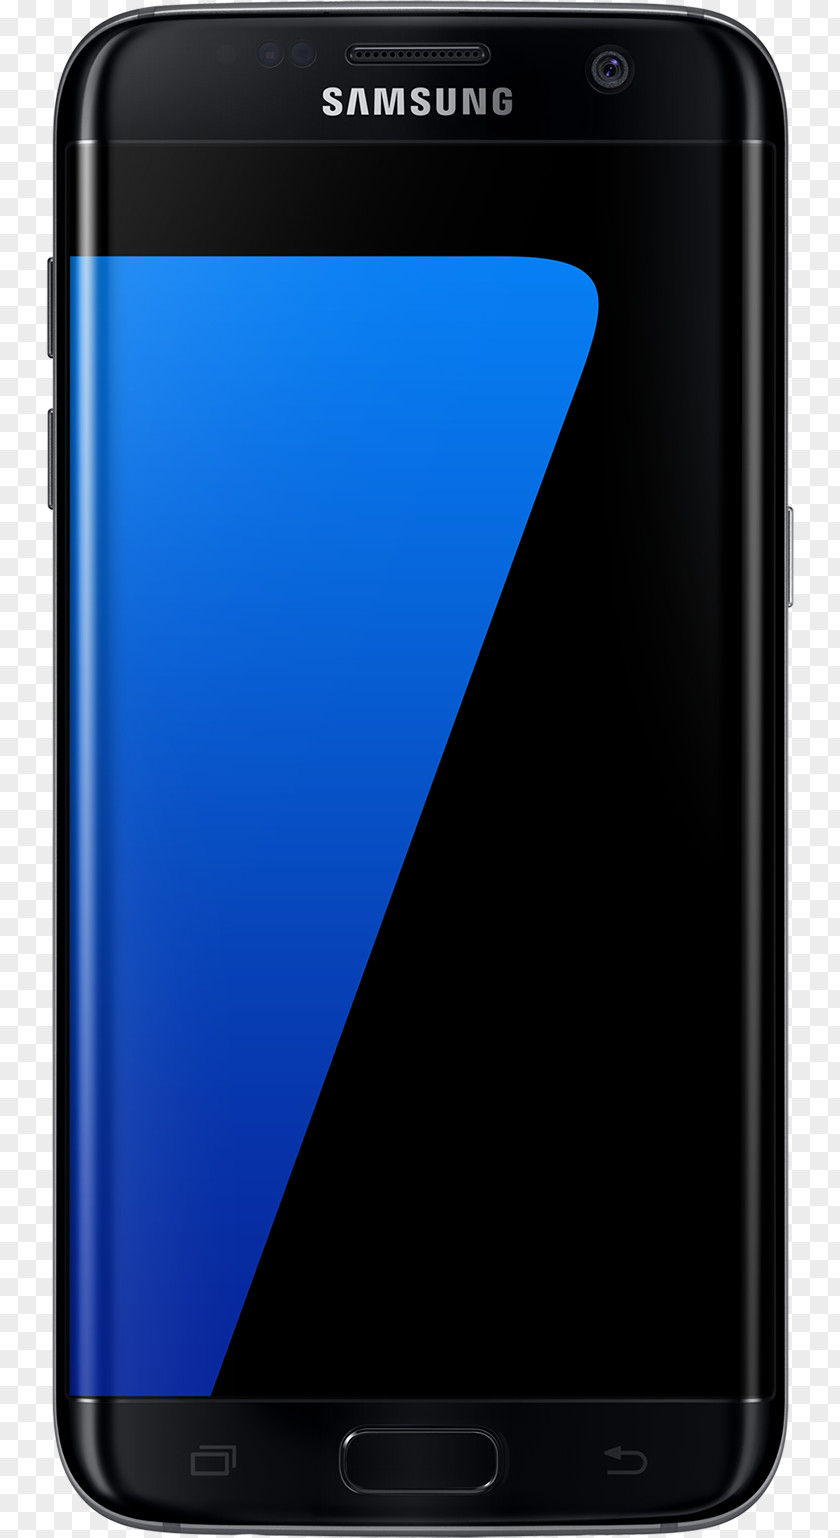 Samsung GALAXY S7 Edge Galaxy S6 Front-facing Camera Android PNG